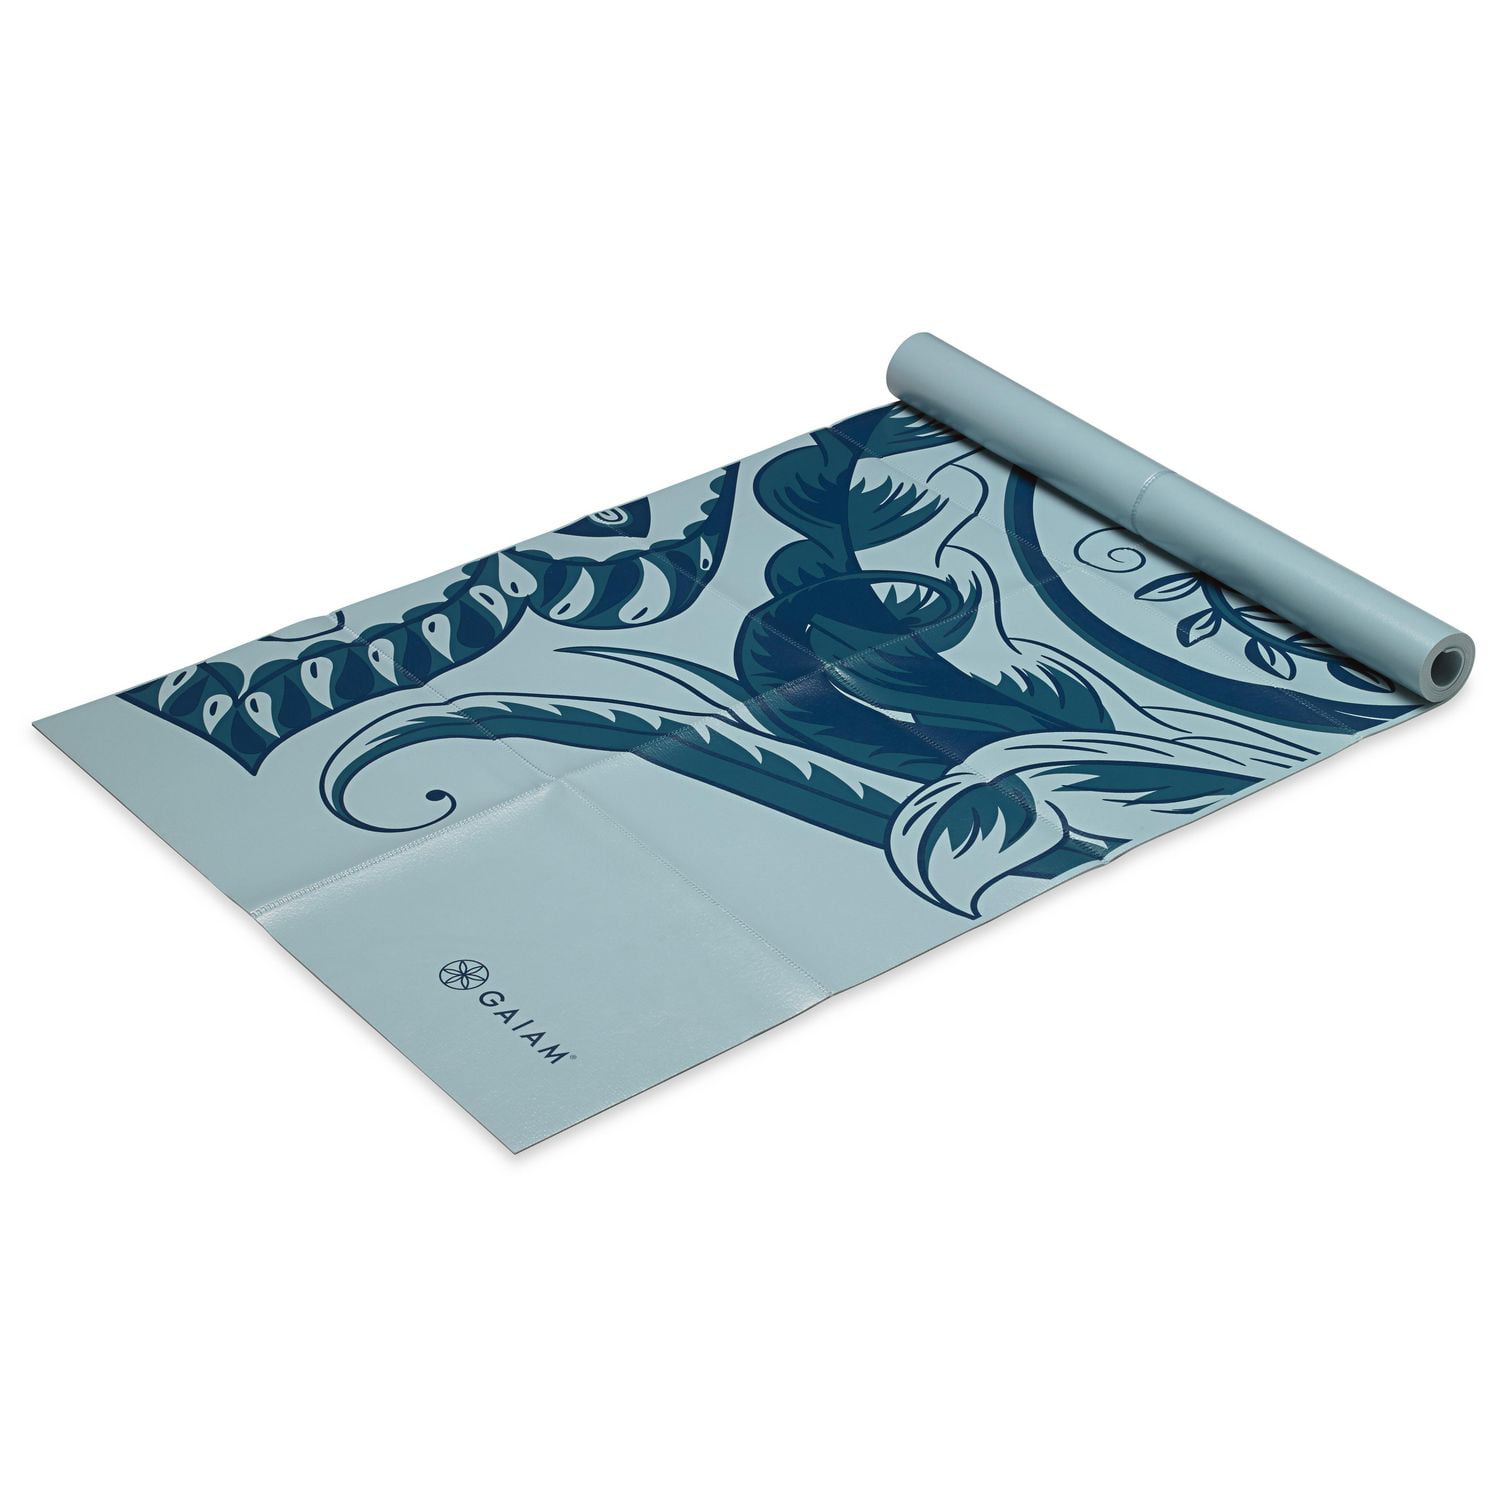 Gaiam 5mm Printed Yoga Mat Tie Dye Frost - ShopperBoard